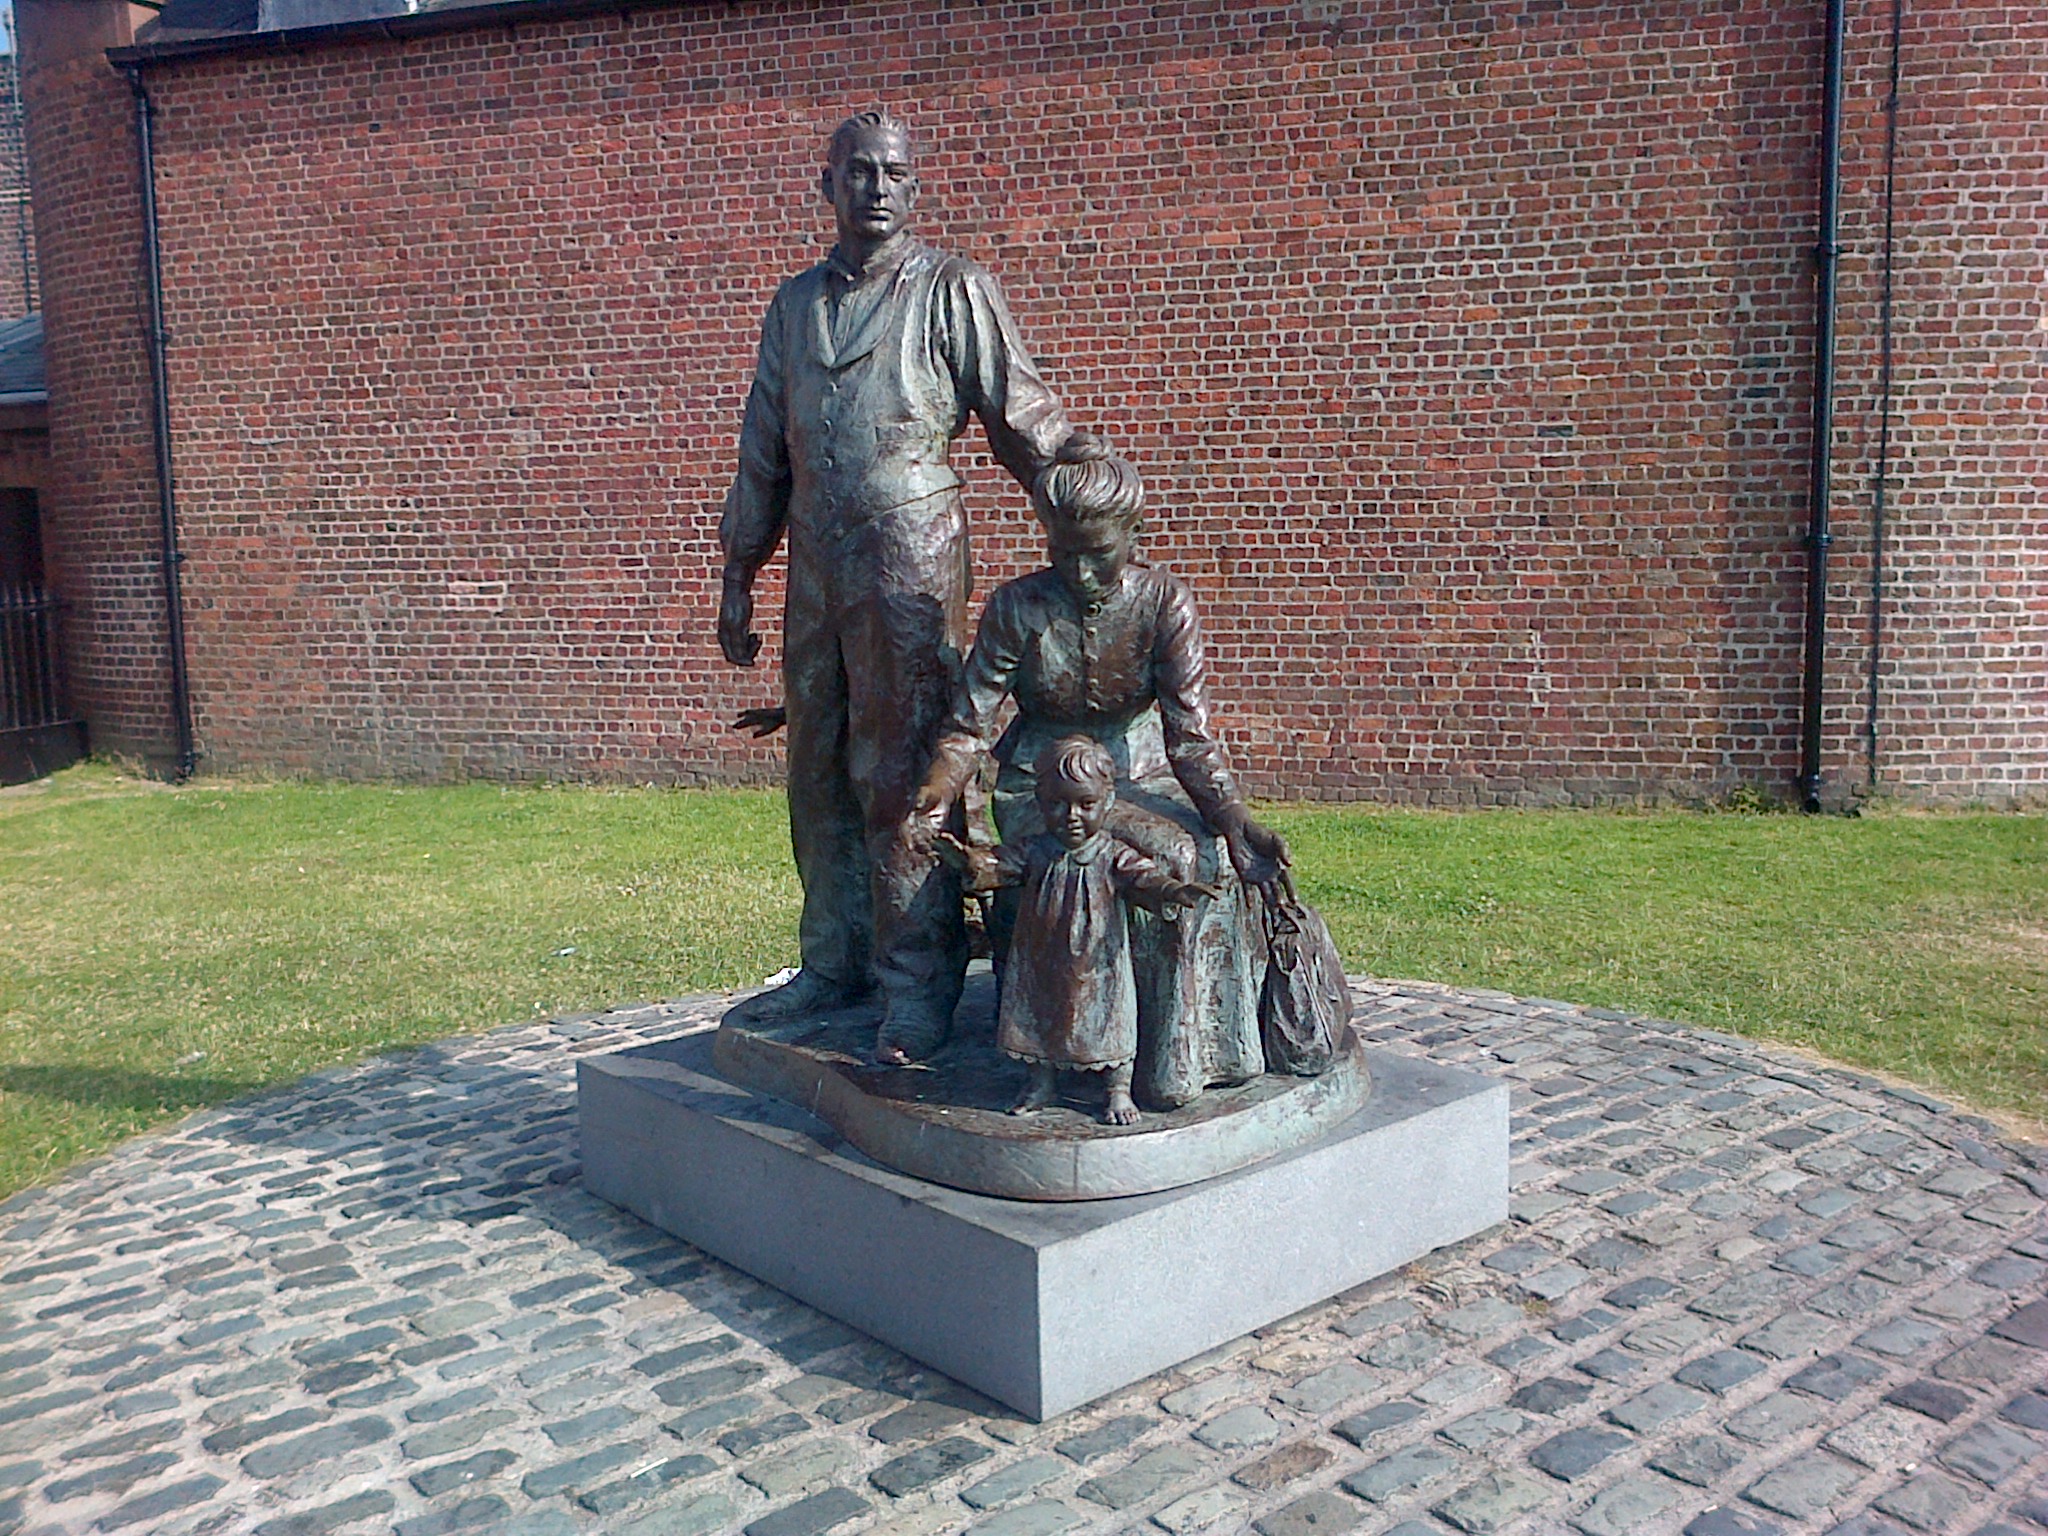 Liverpool - statuie in vechiul port - emigrare spre USA